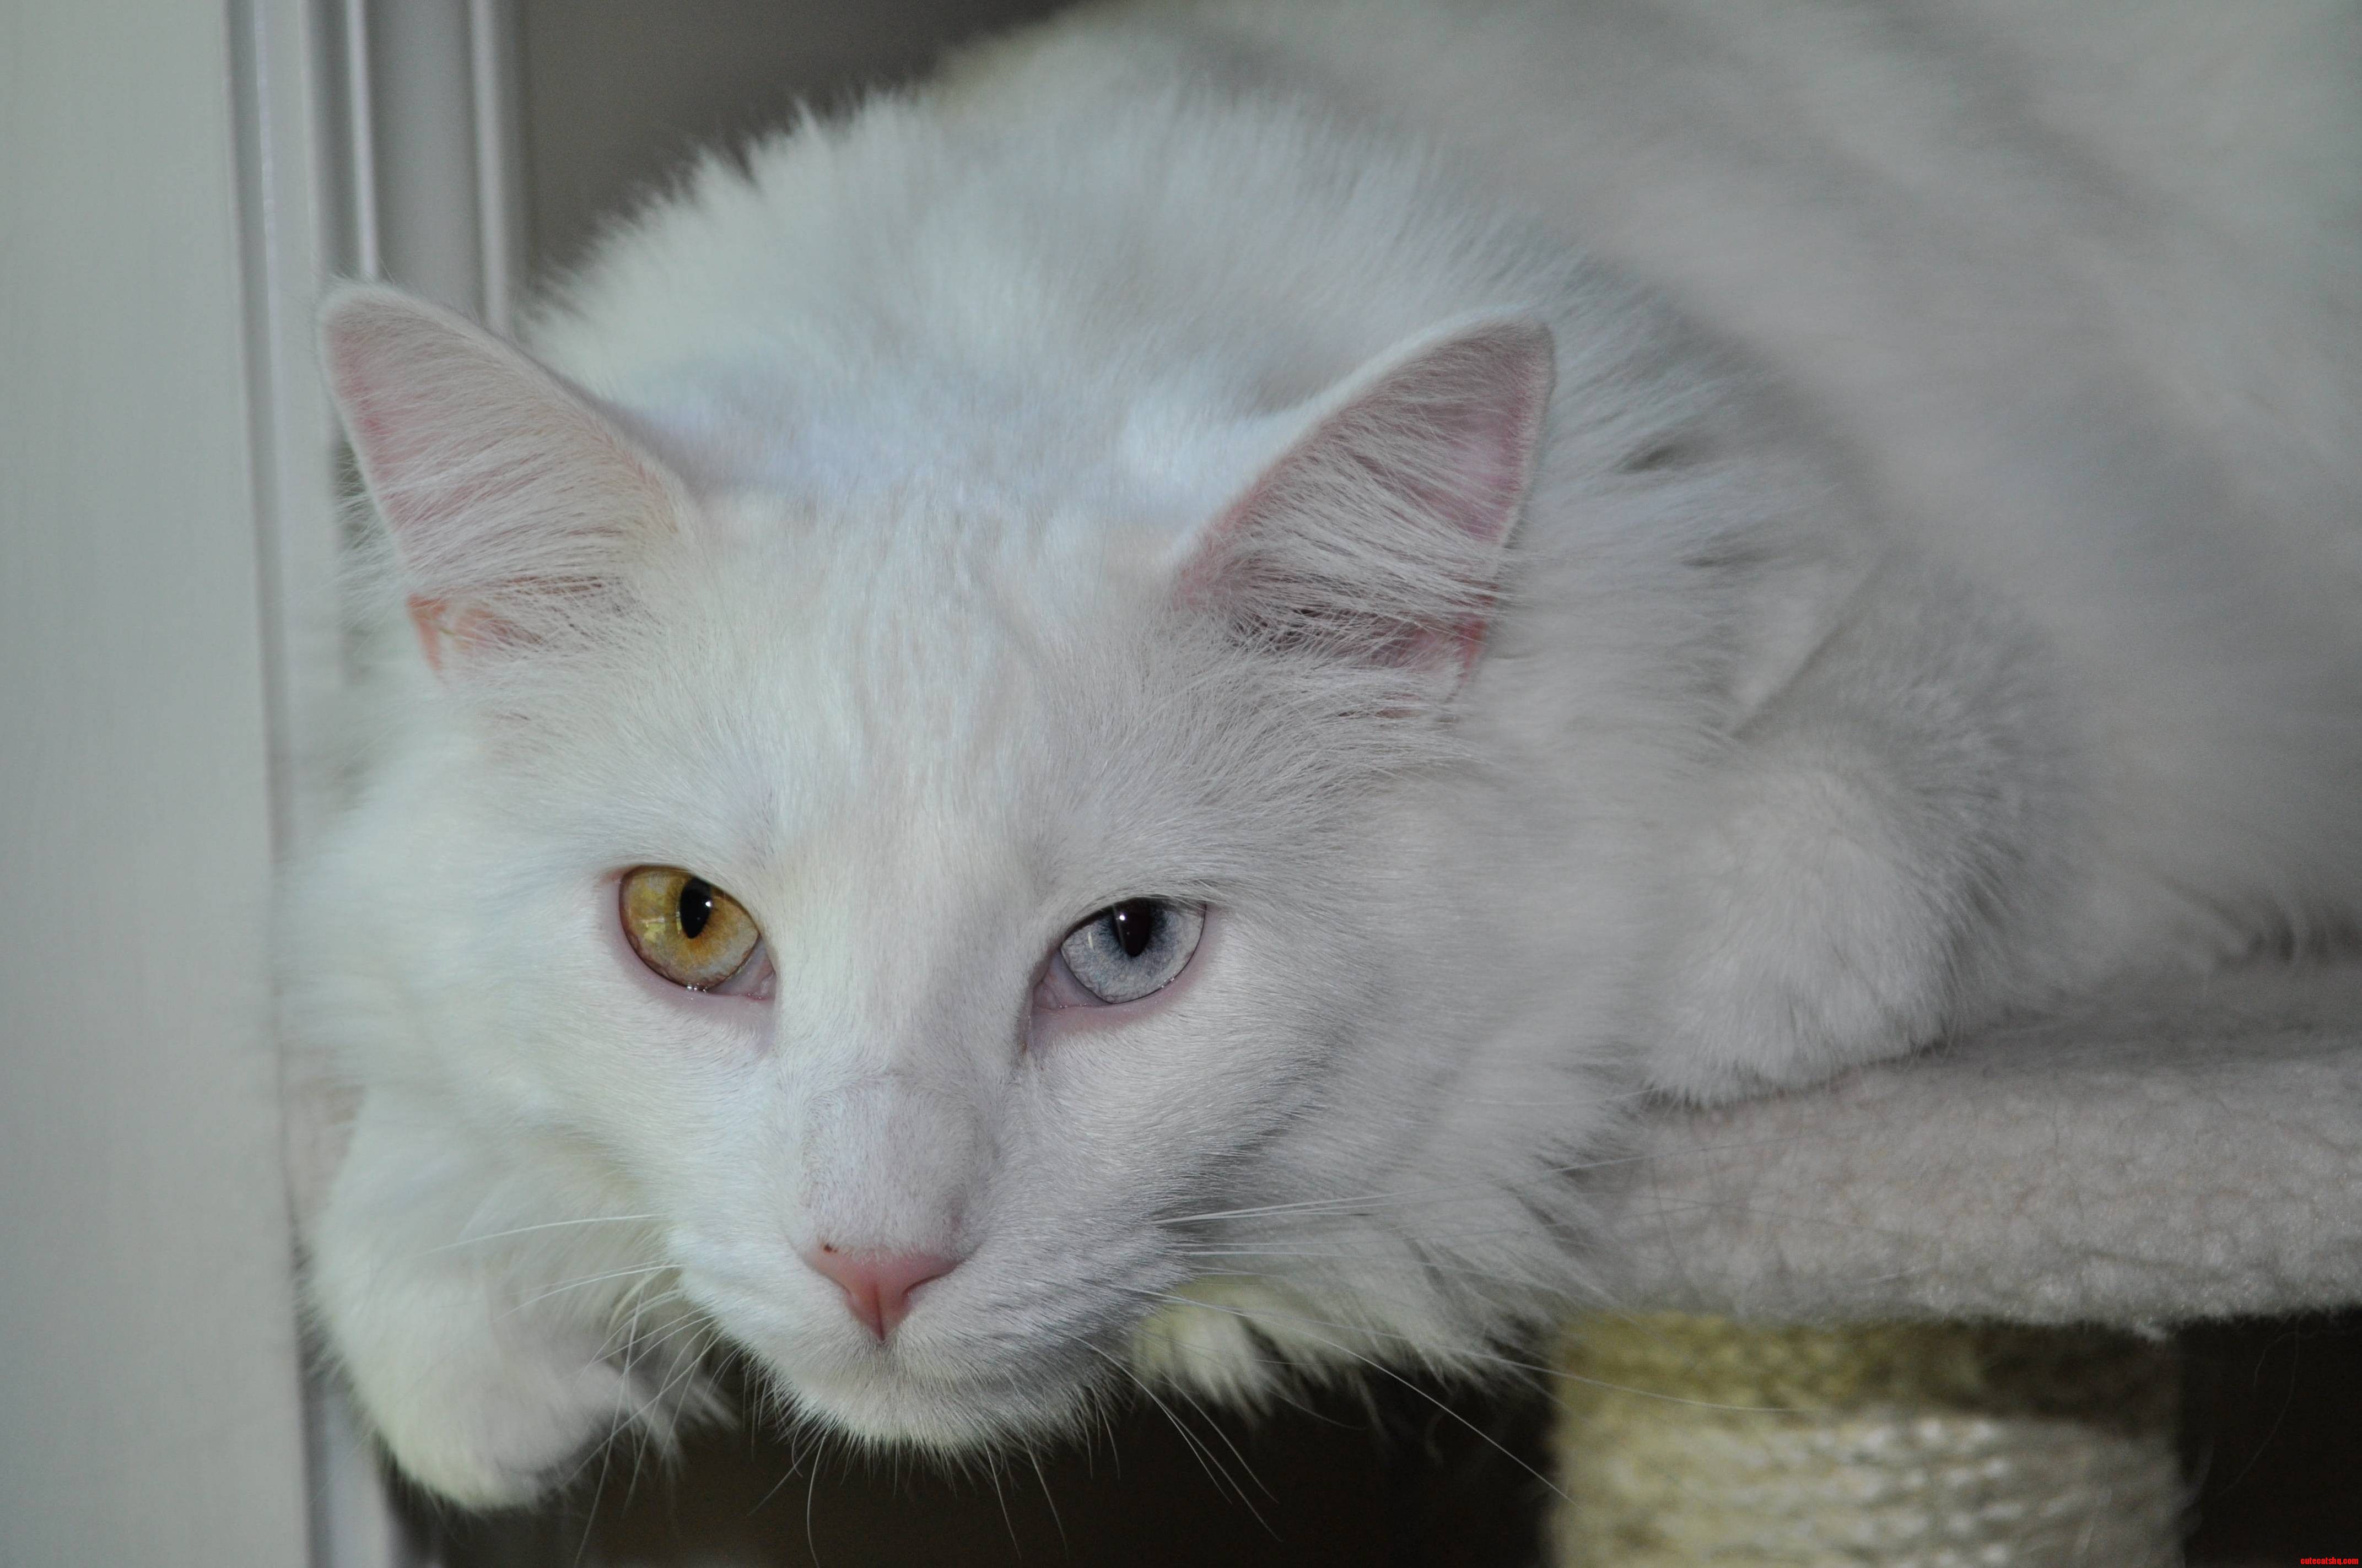 My handsome kitty with heterochromia